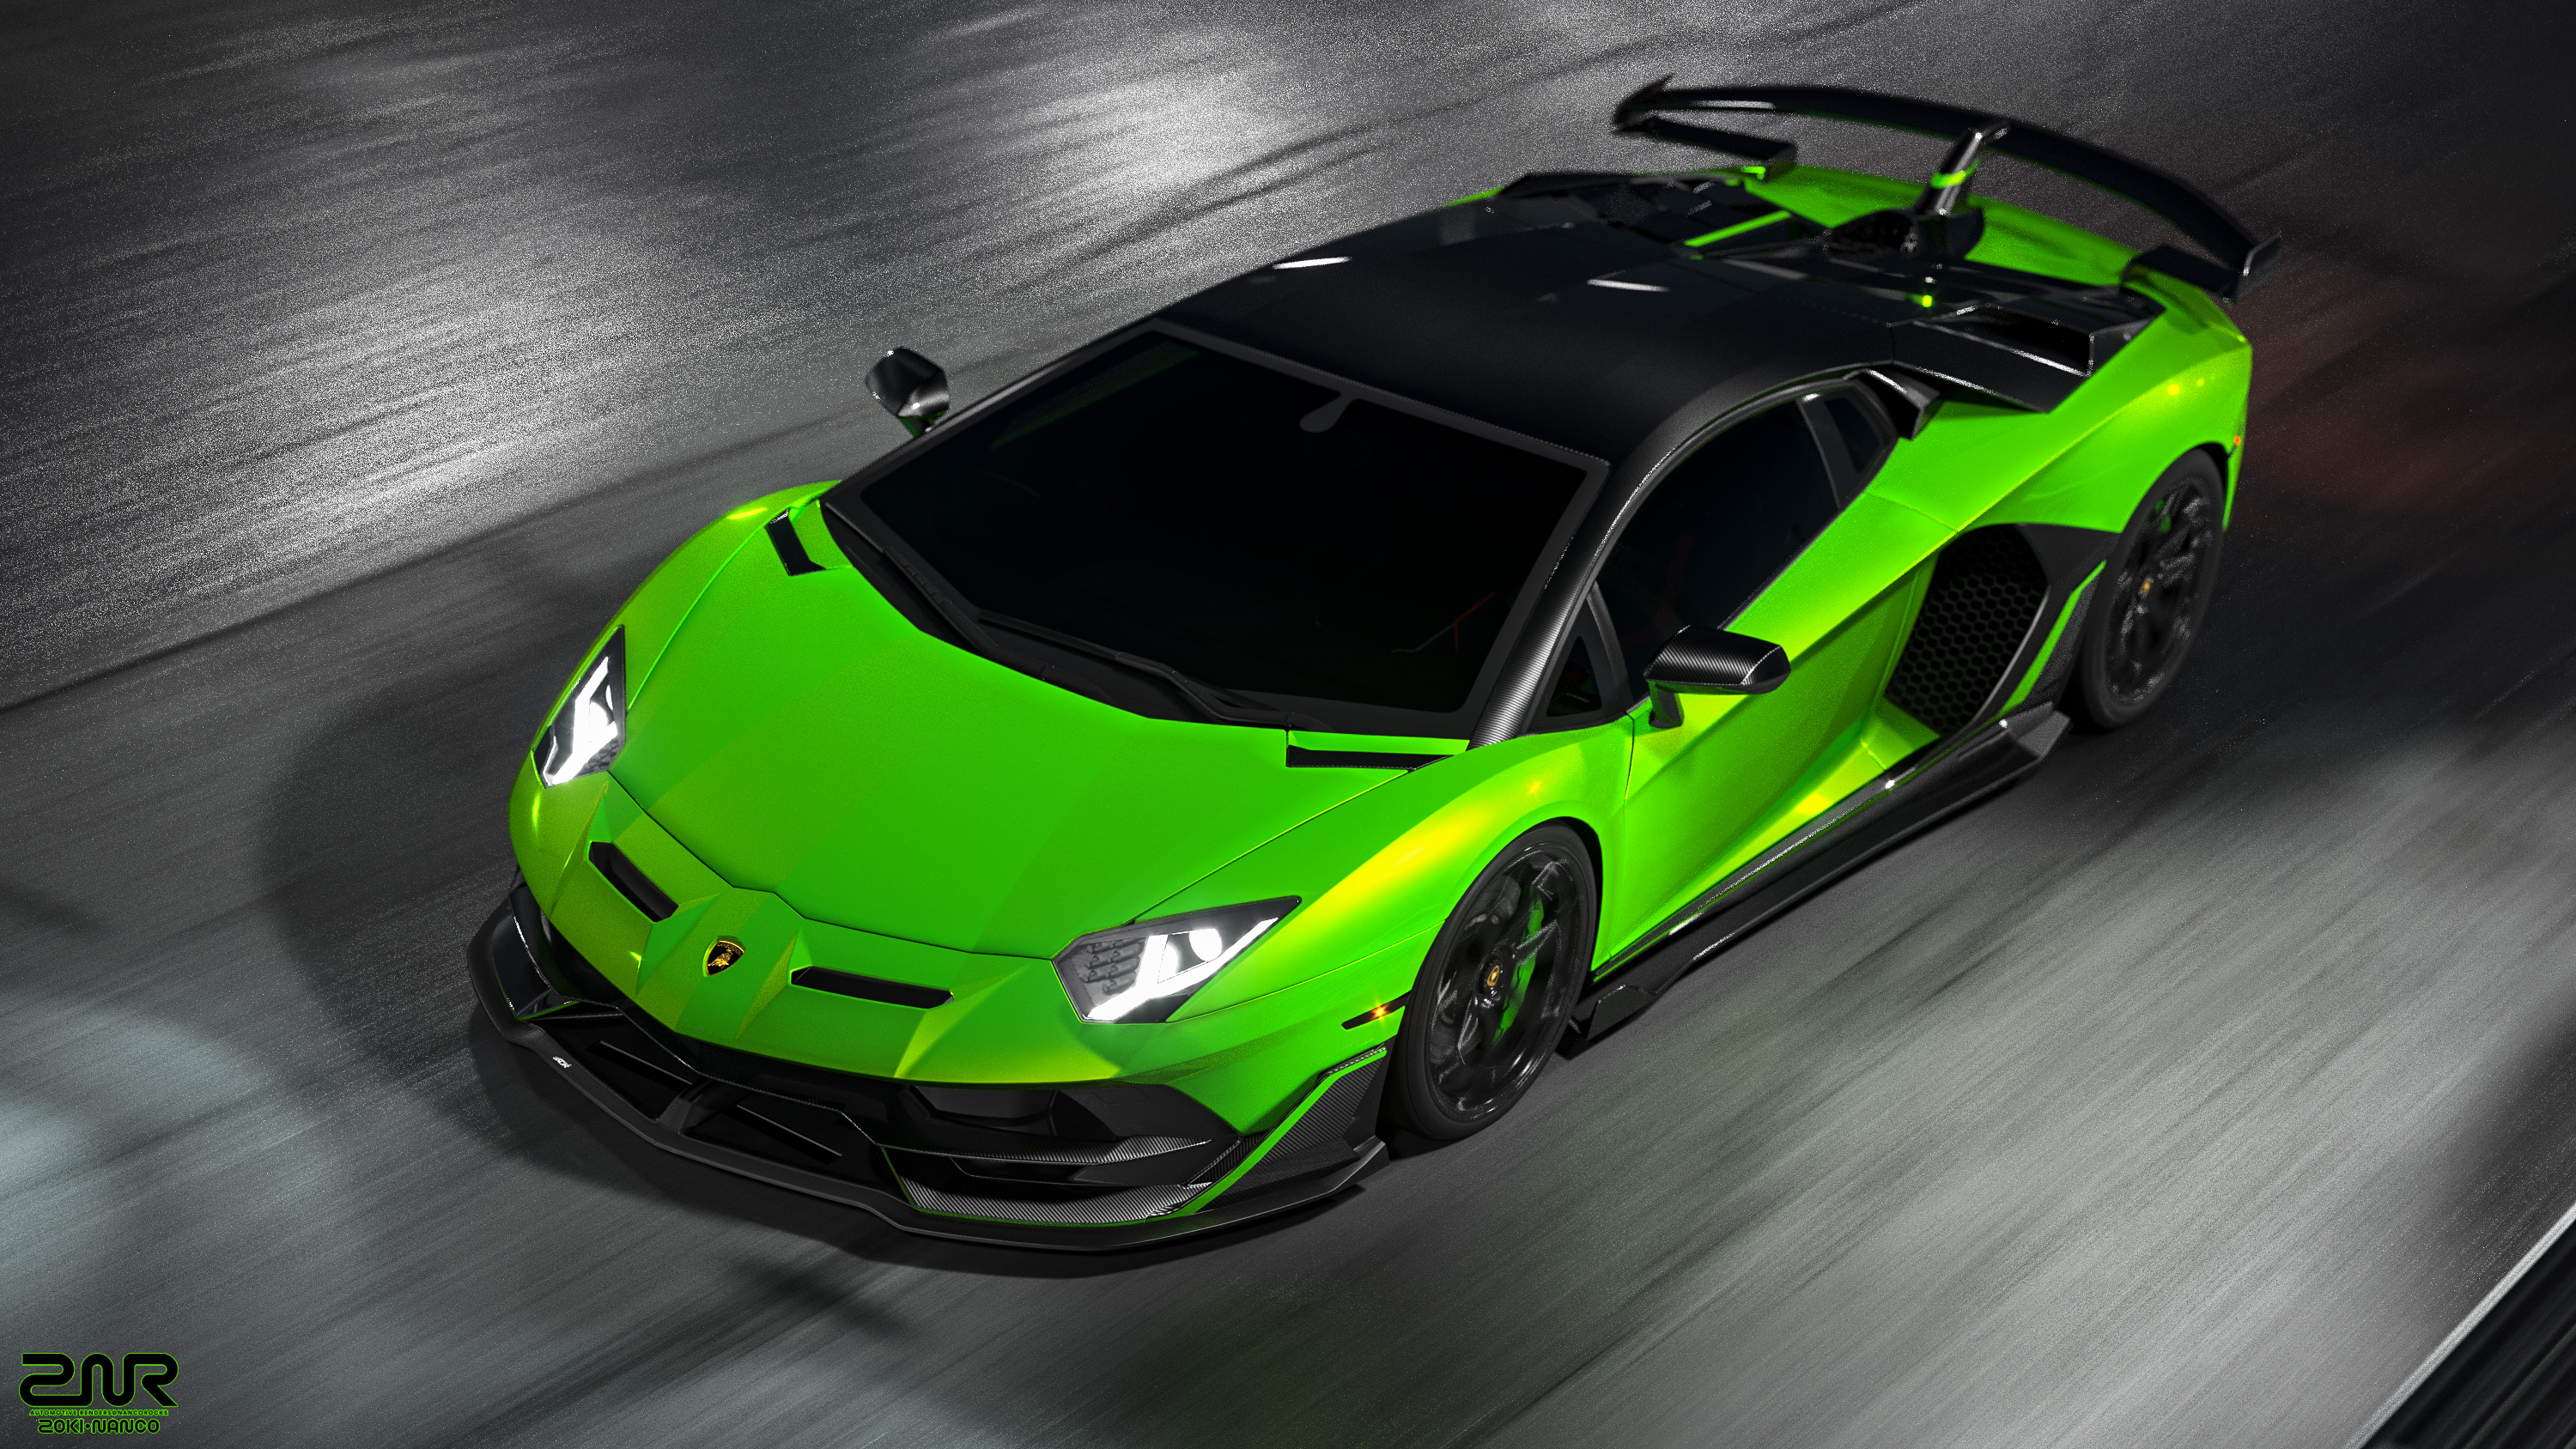 2019 Lamborghini Aventador SVJ 4k, HD Cars, 4k Wallpapers, Images